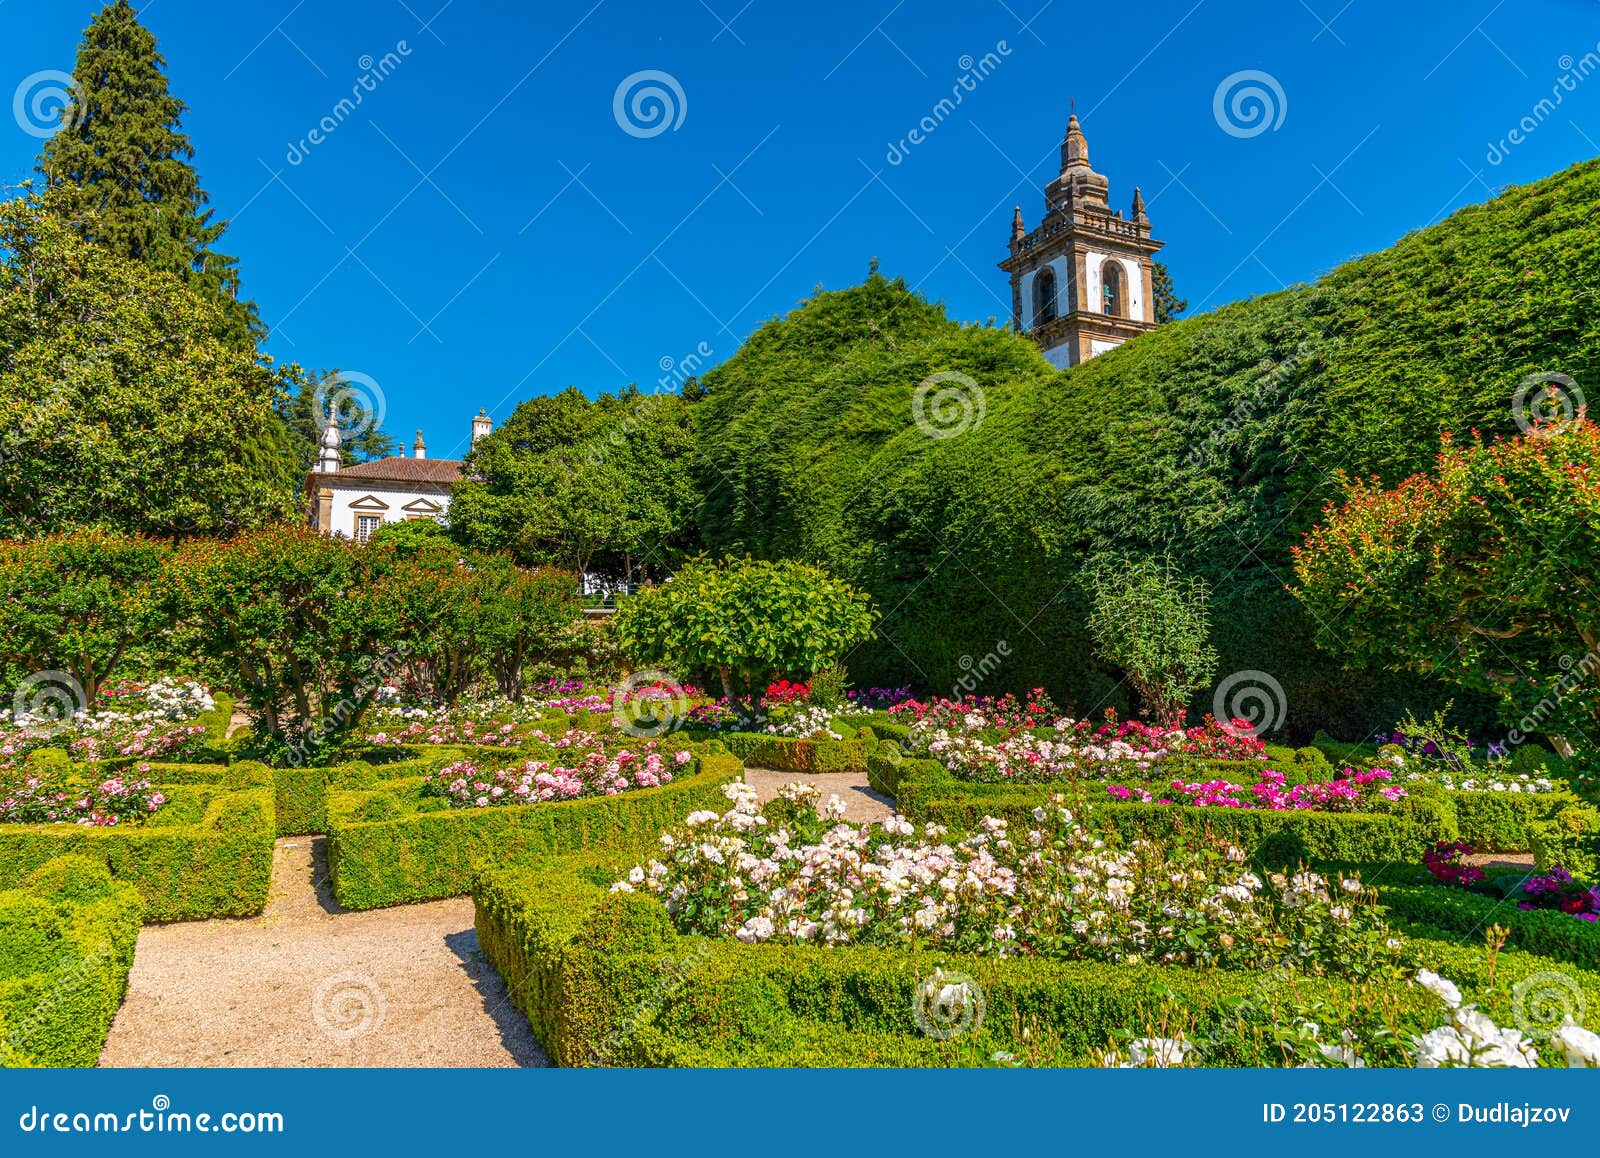 gardens and casa de mateus estate in portugal